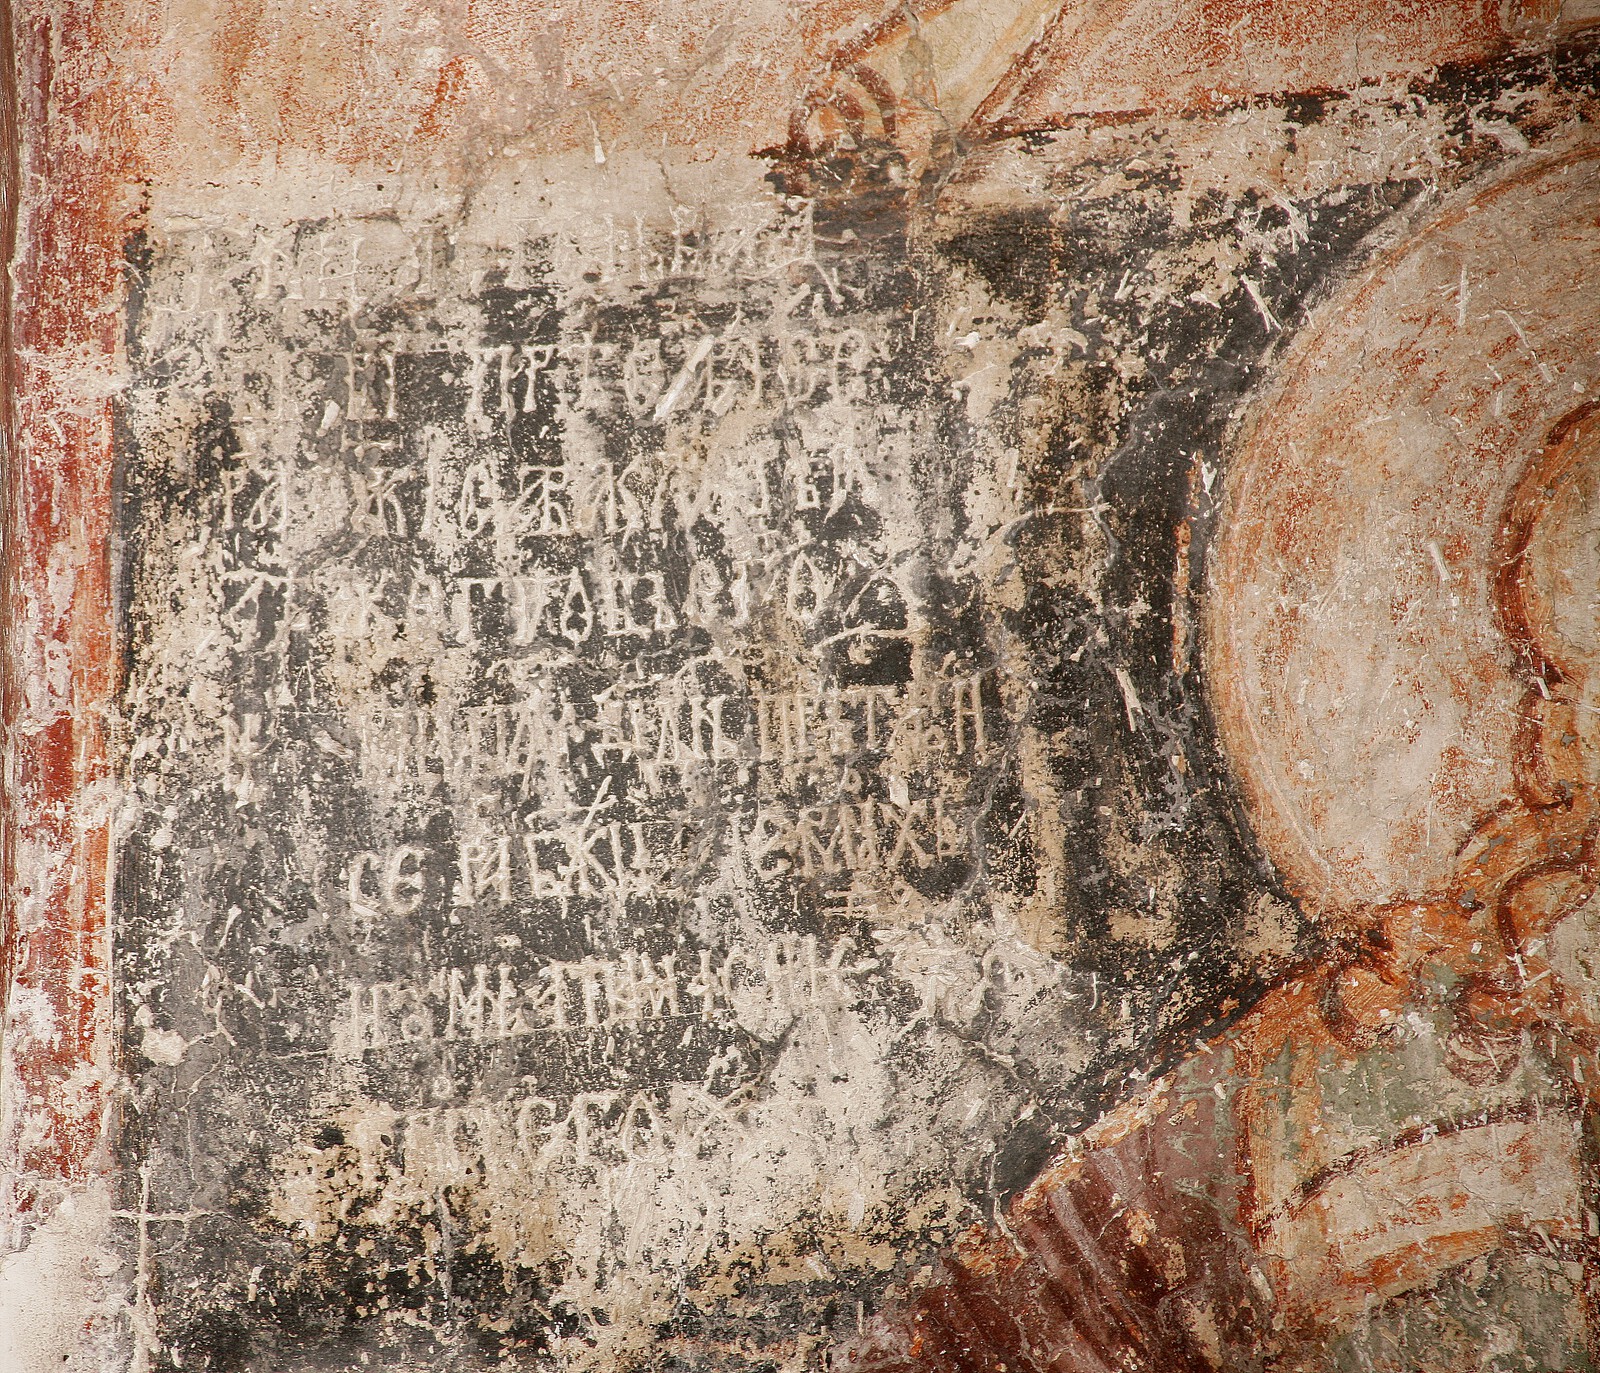 Inscription at Adam's figure